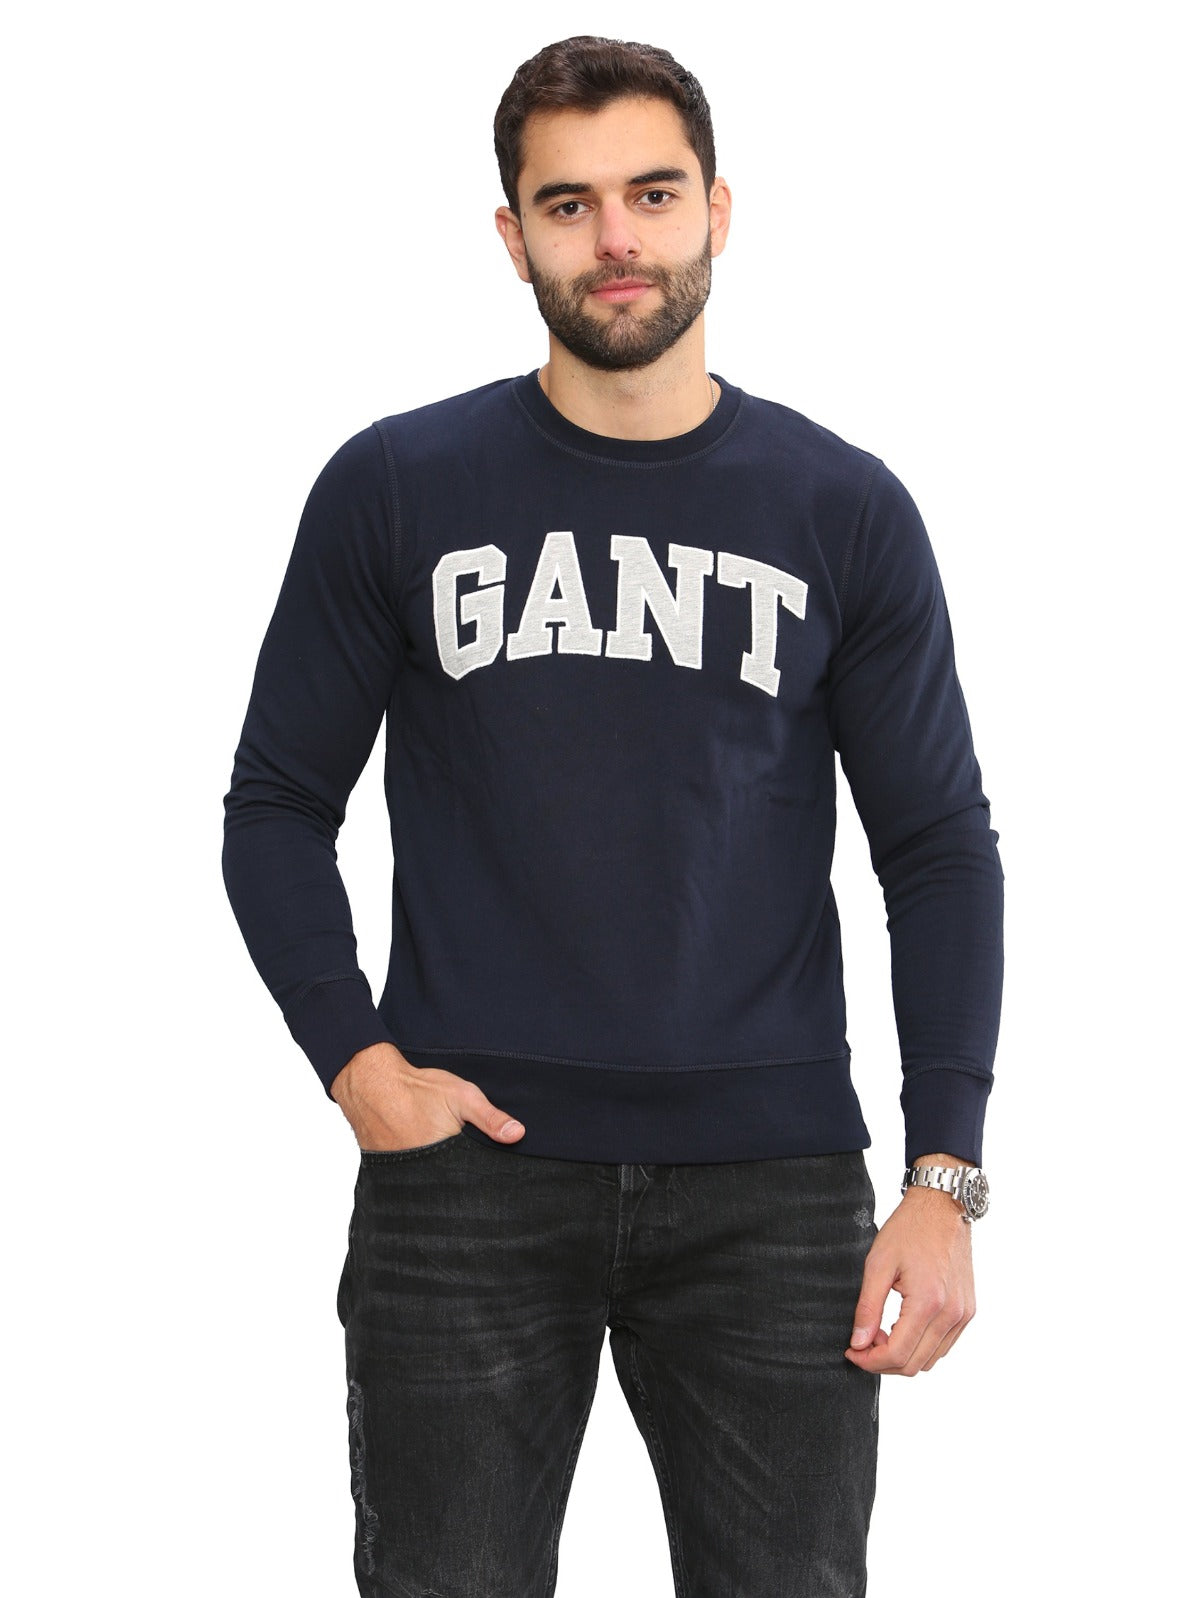 Gant Mens Long Sleeved Outlined Branded Sweatshirt